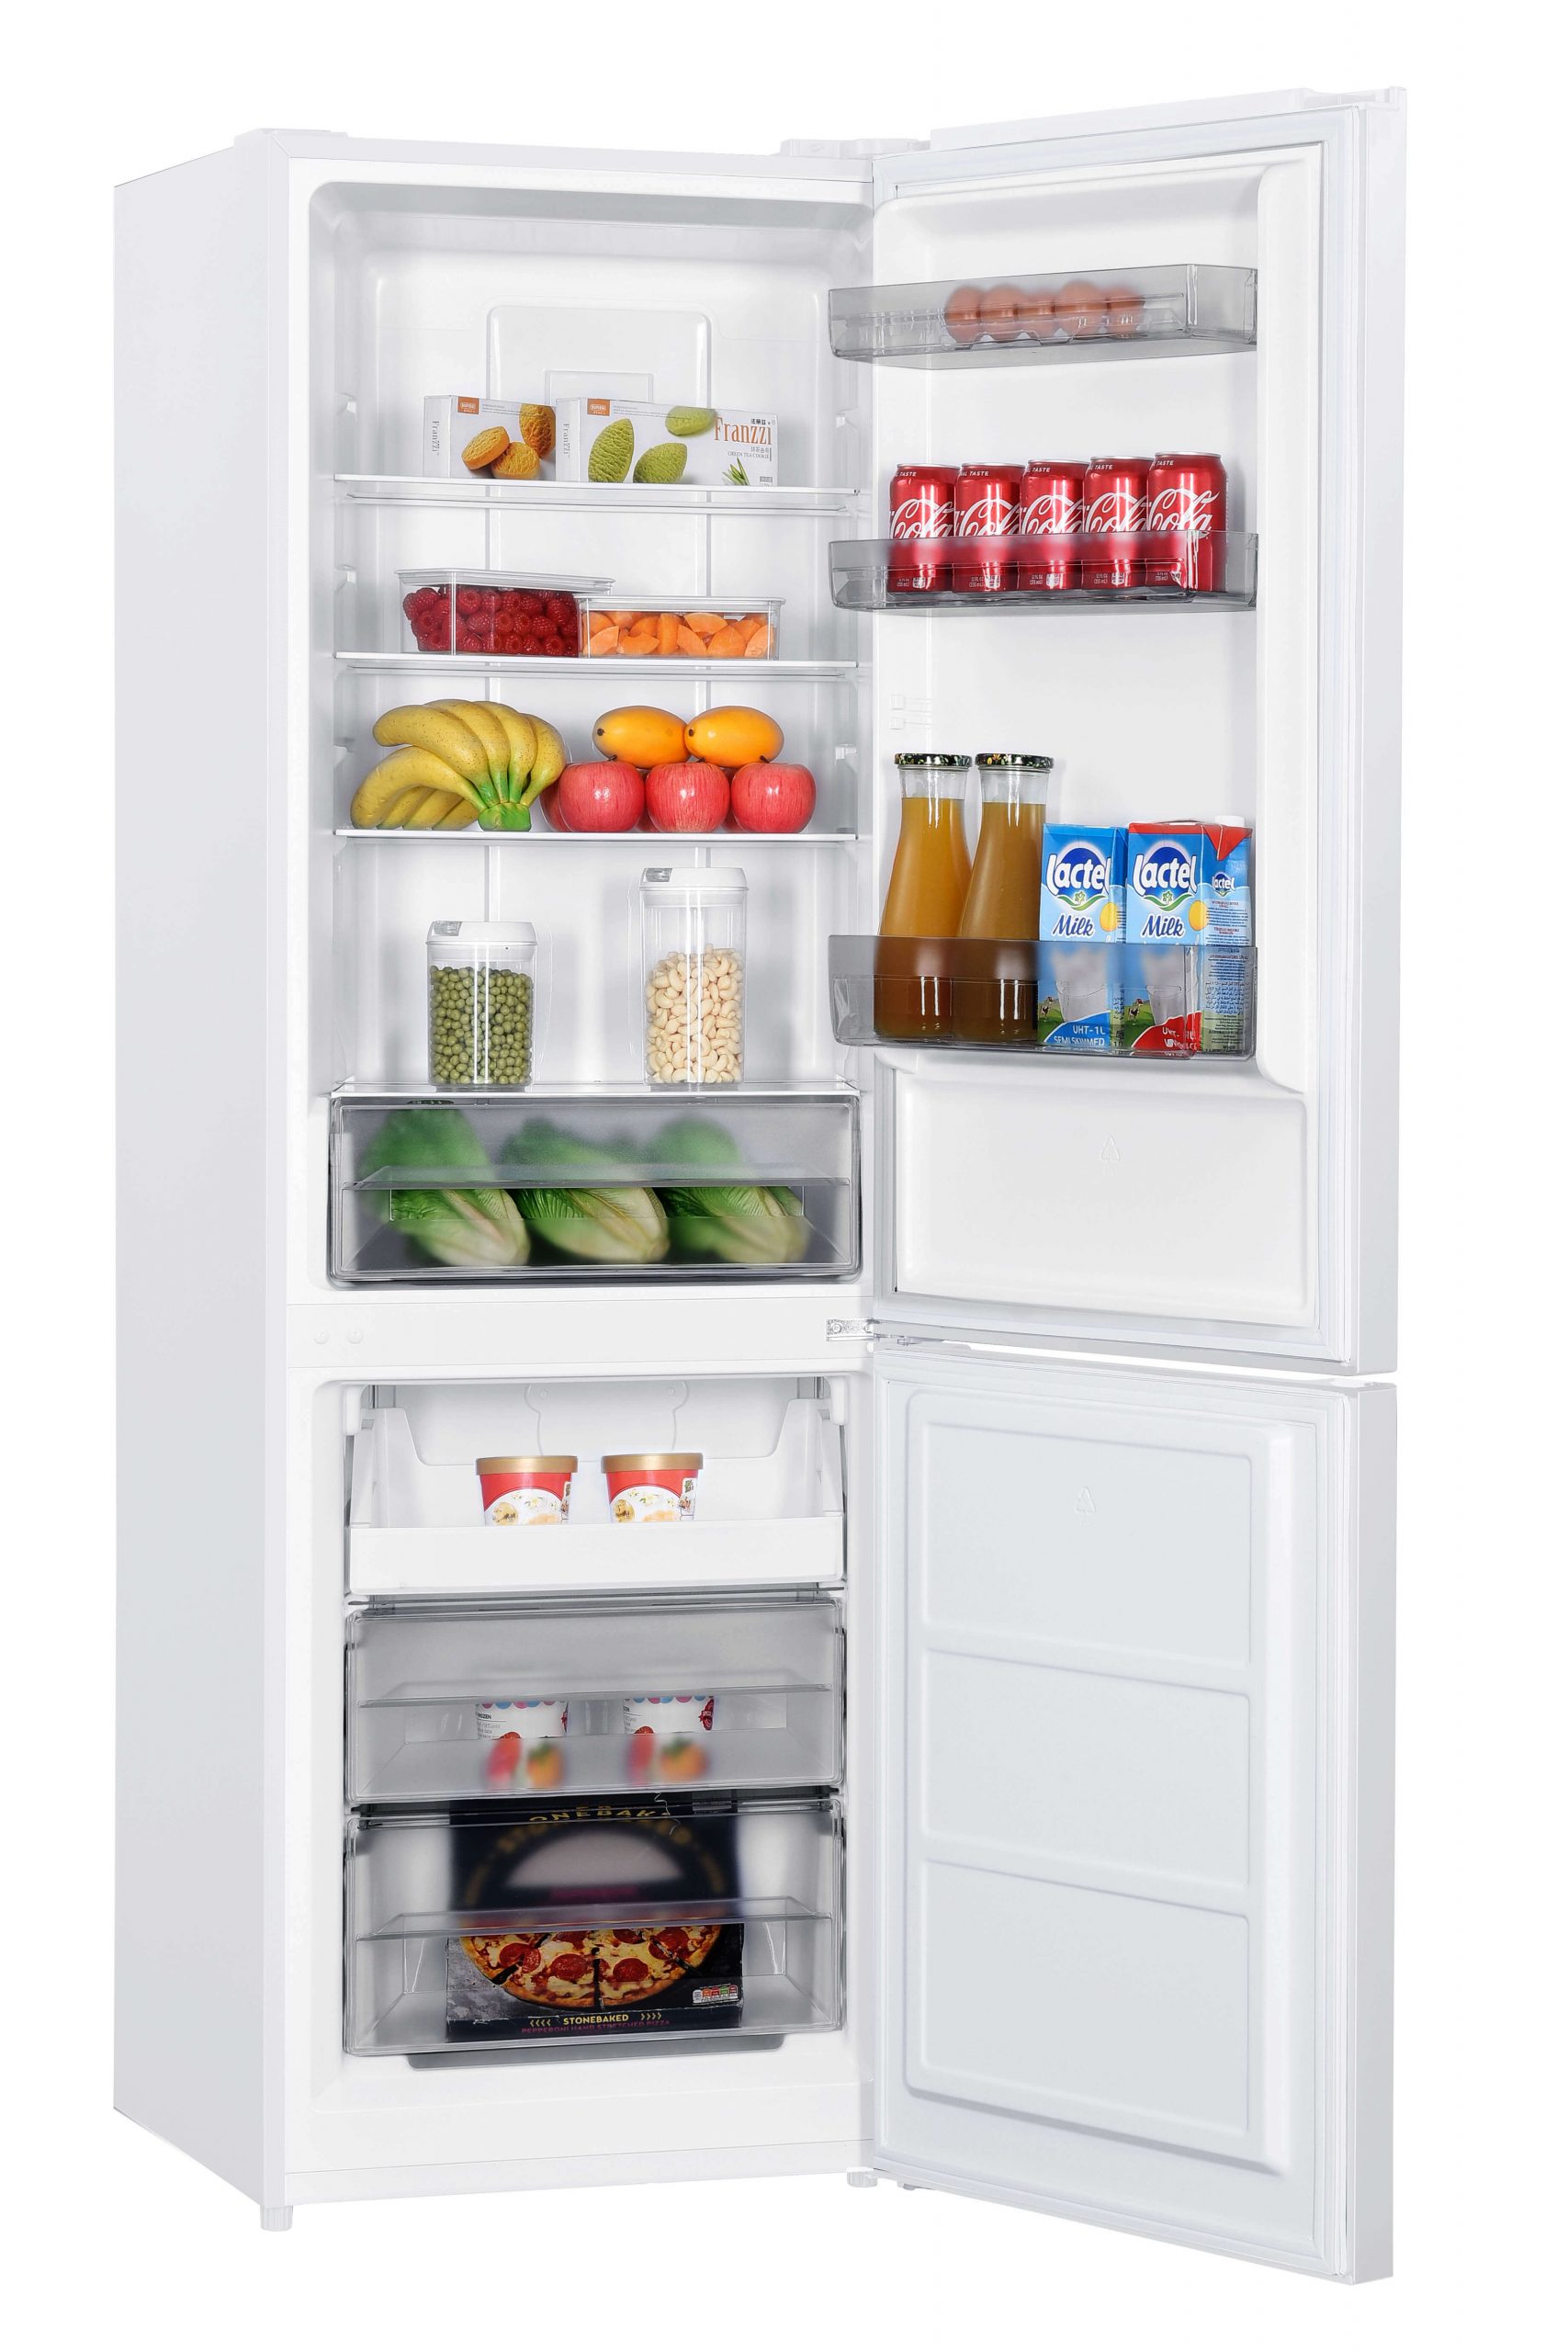 Danby 10 cu ft Bottom Mount Refrigerator